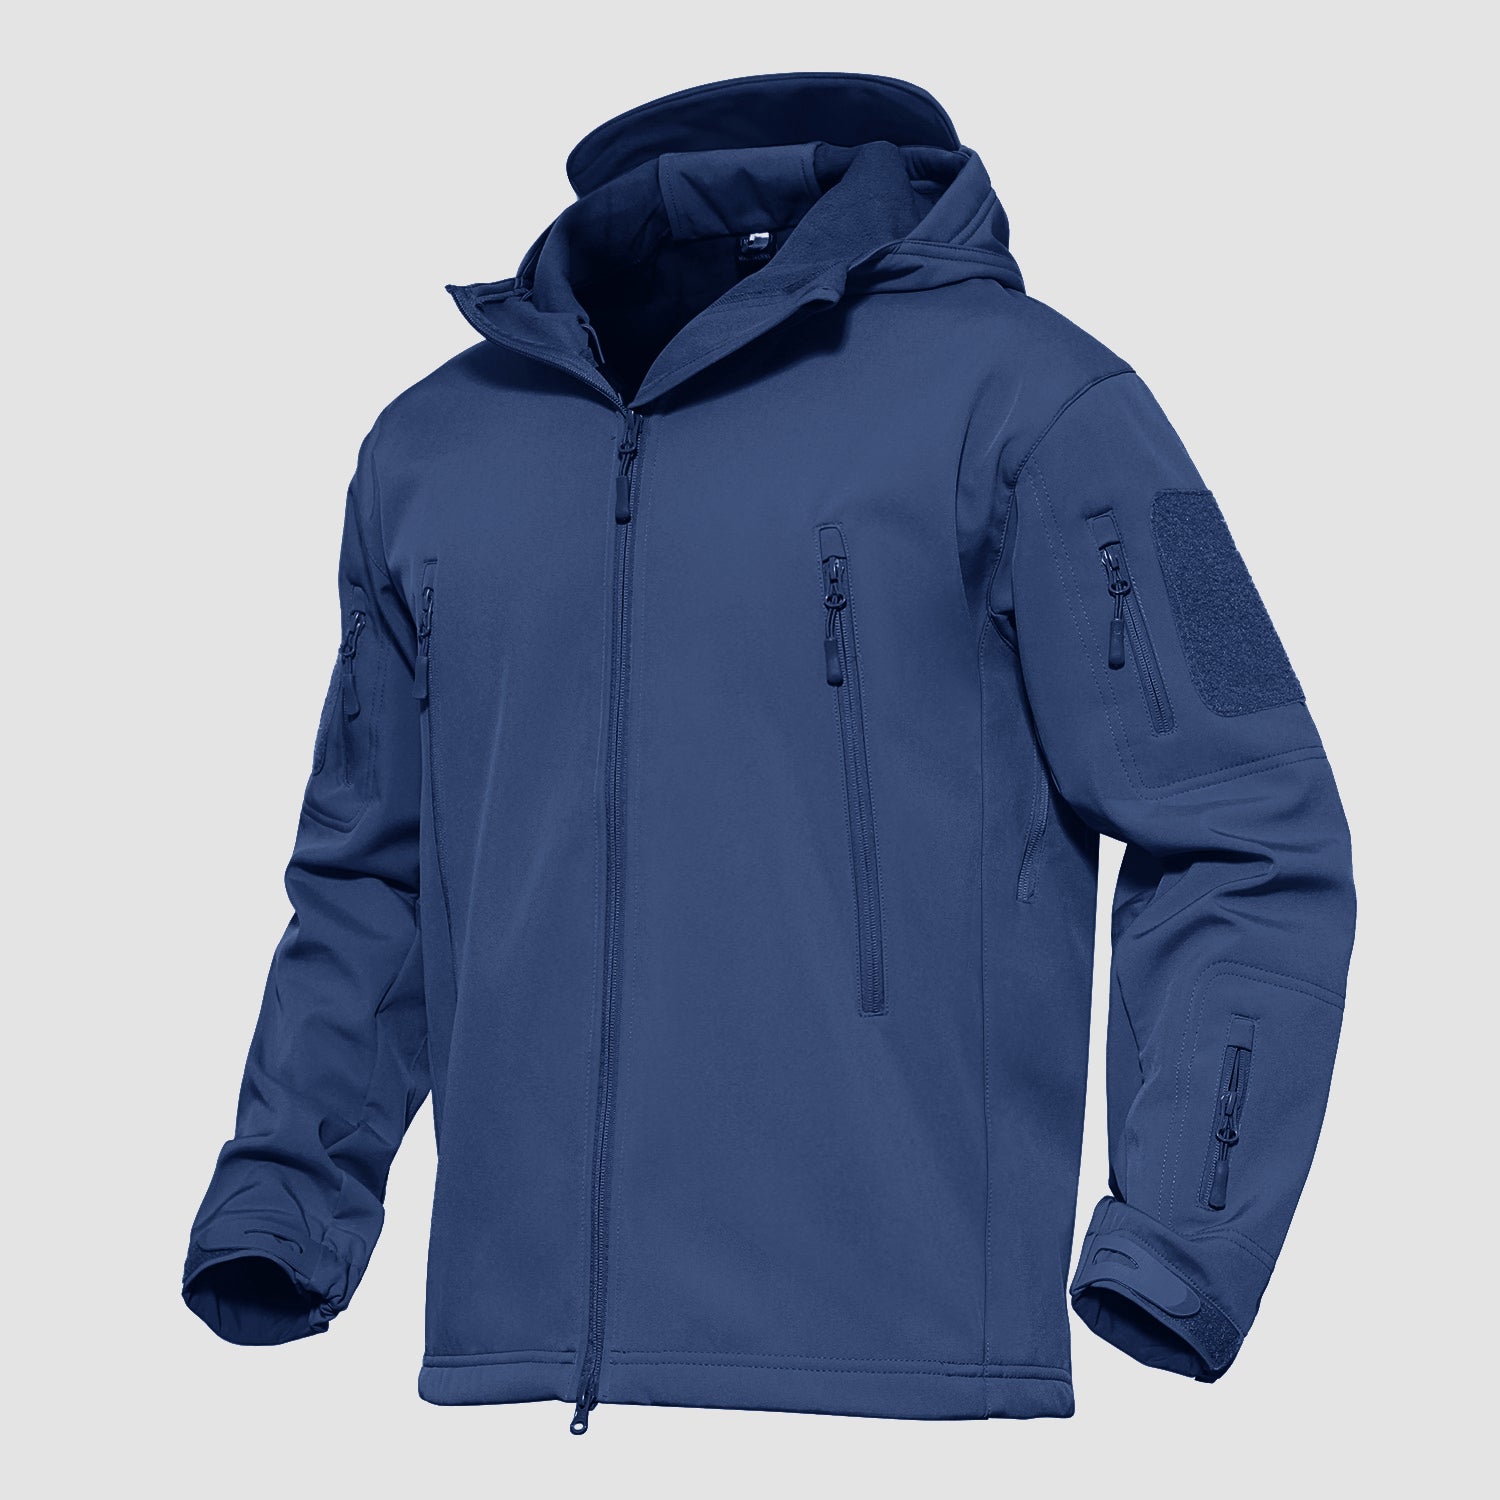 Men's Hooded Tactical Jacket  Resistant Soft Shell Winter Coats